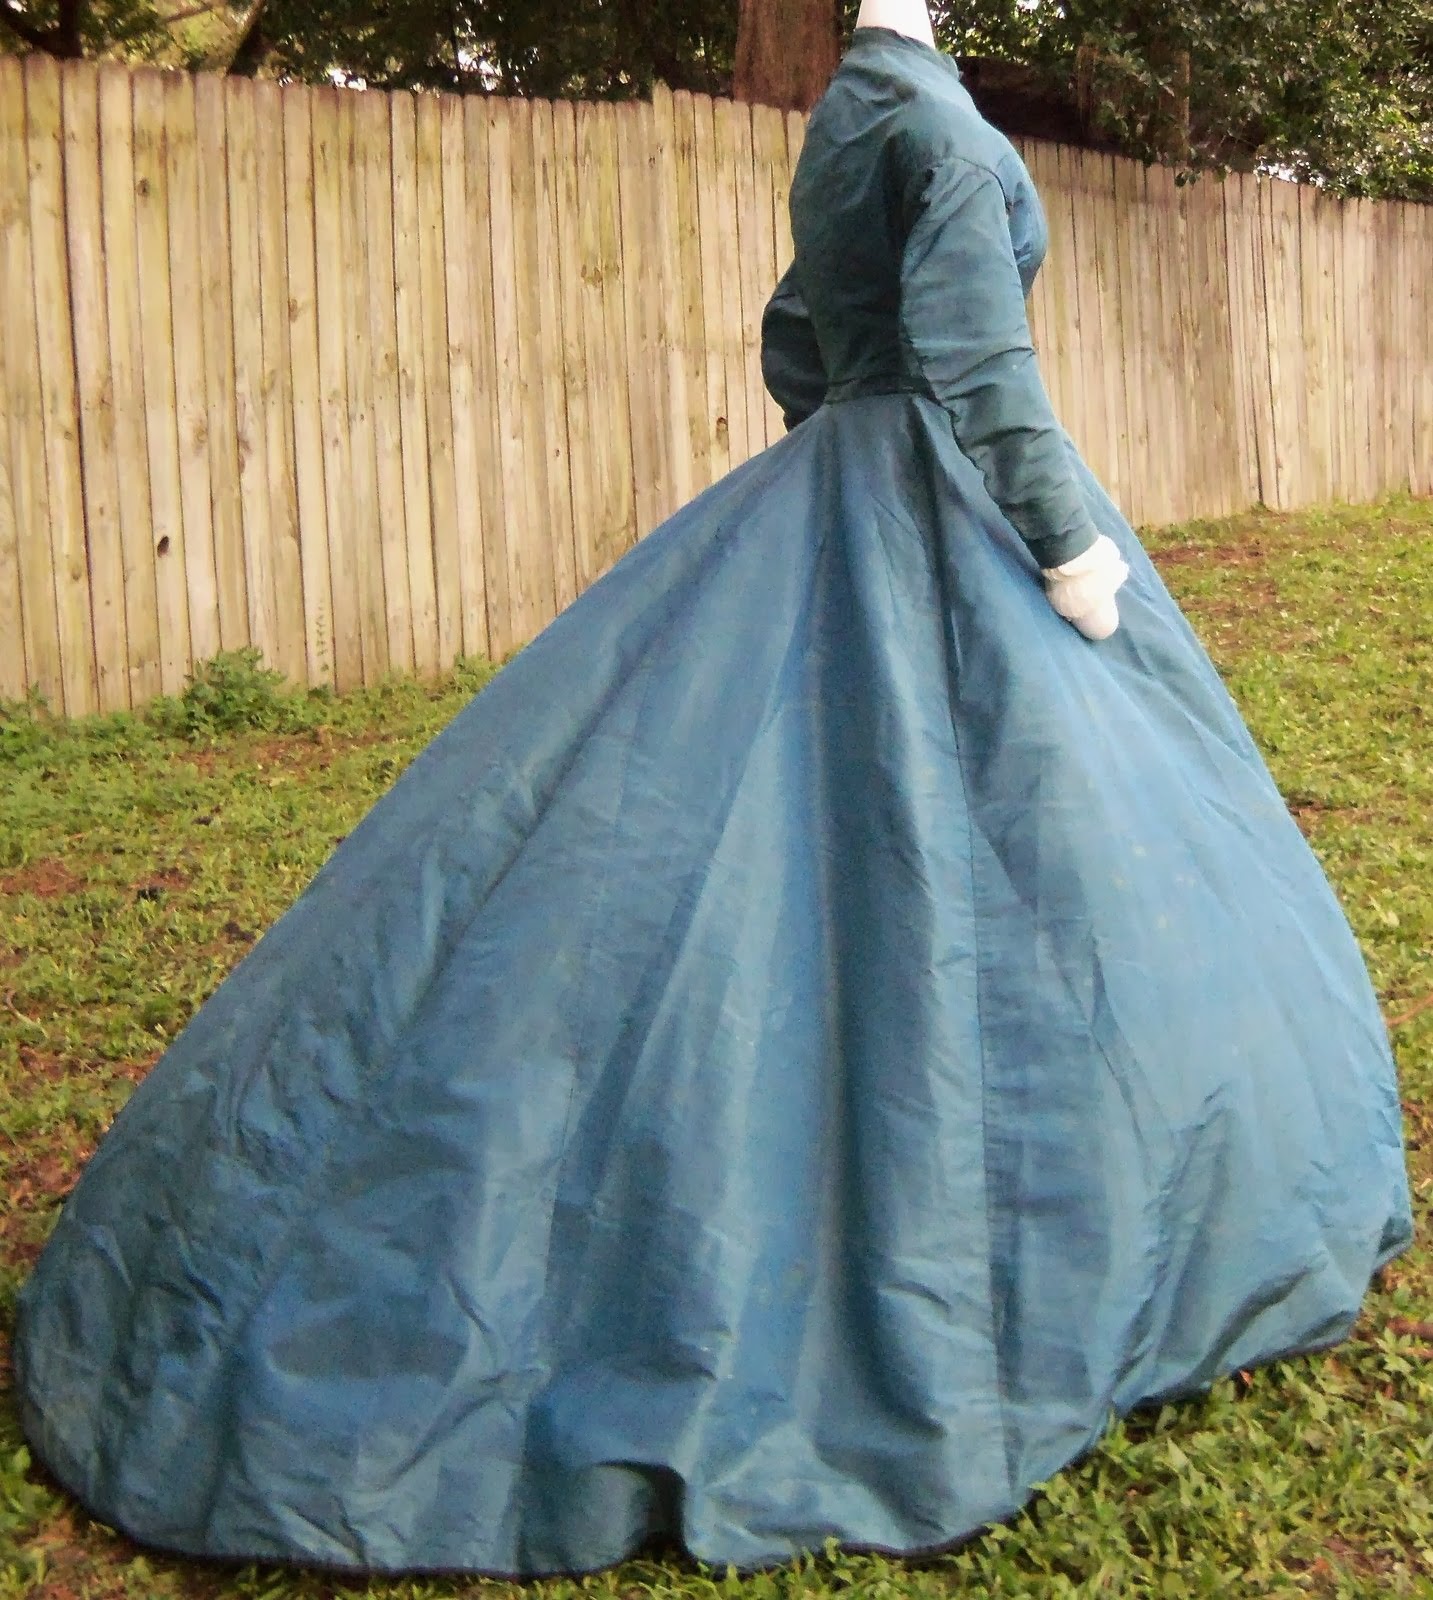 All The Pretty Dresses: Mid 1860's Dress